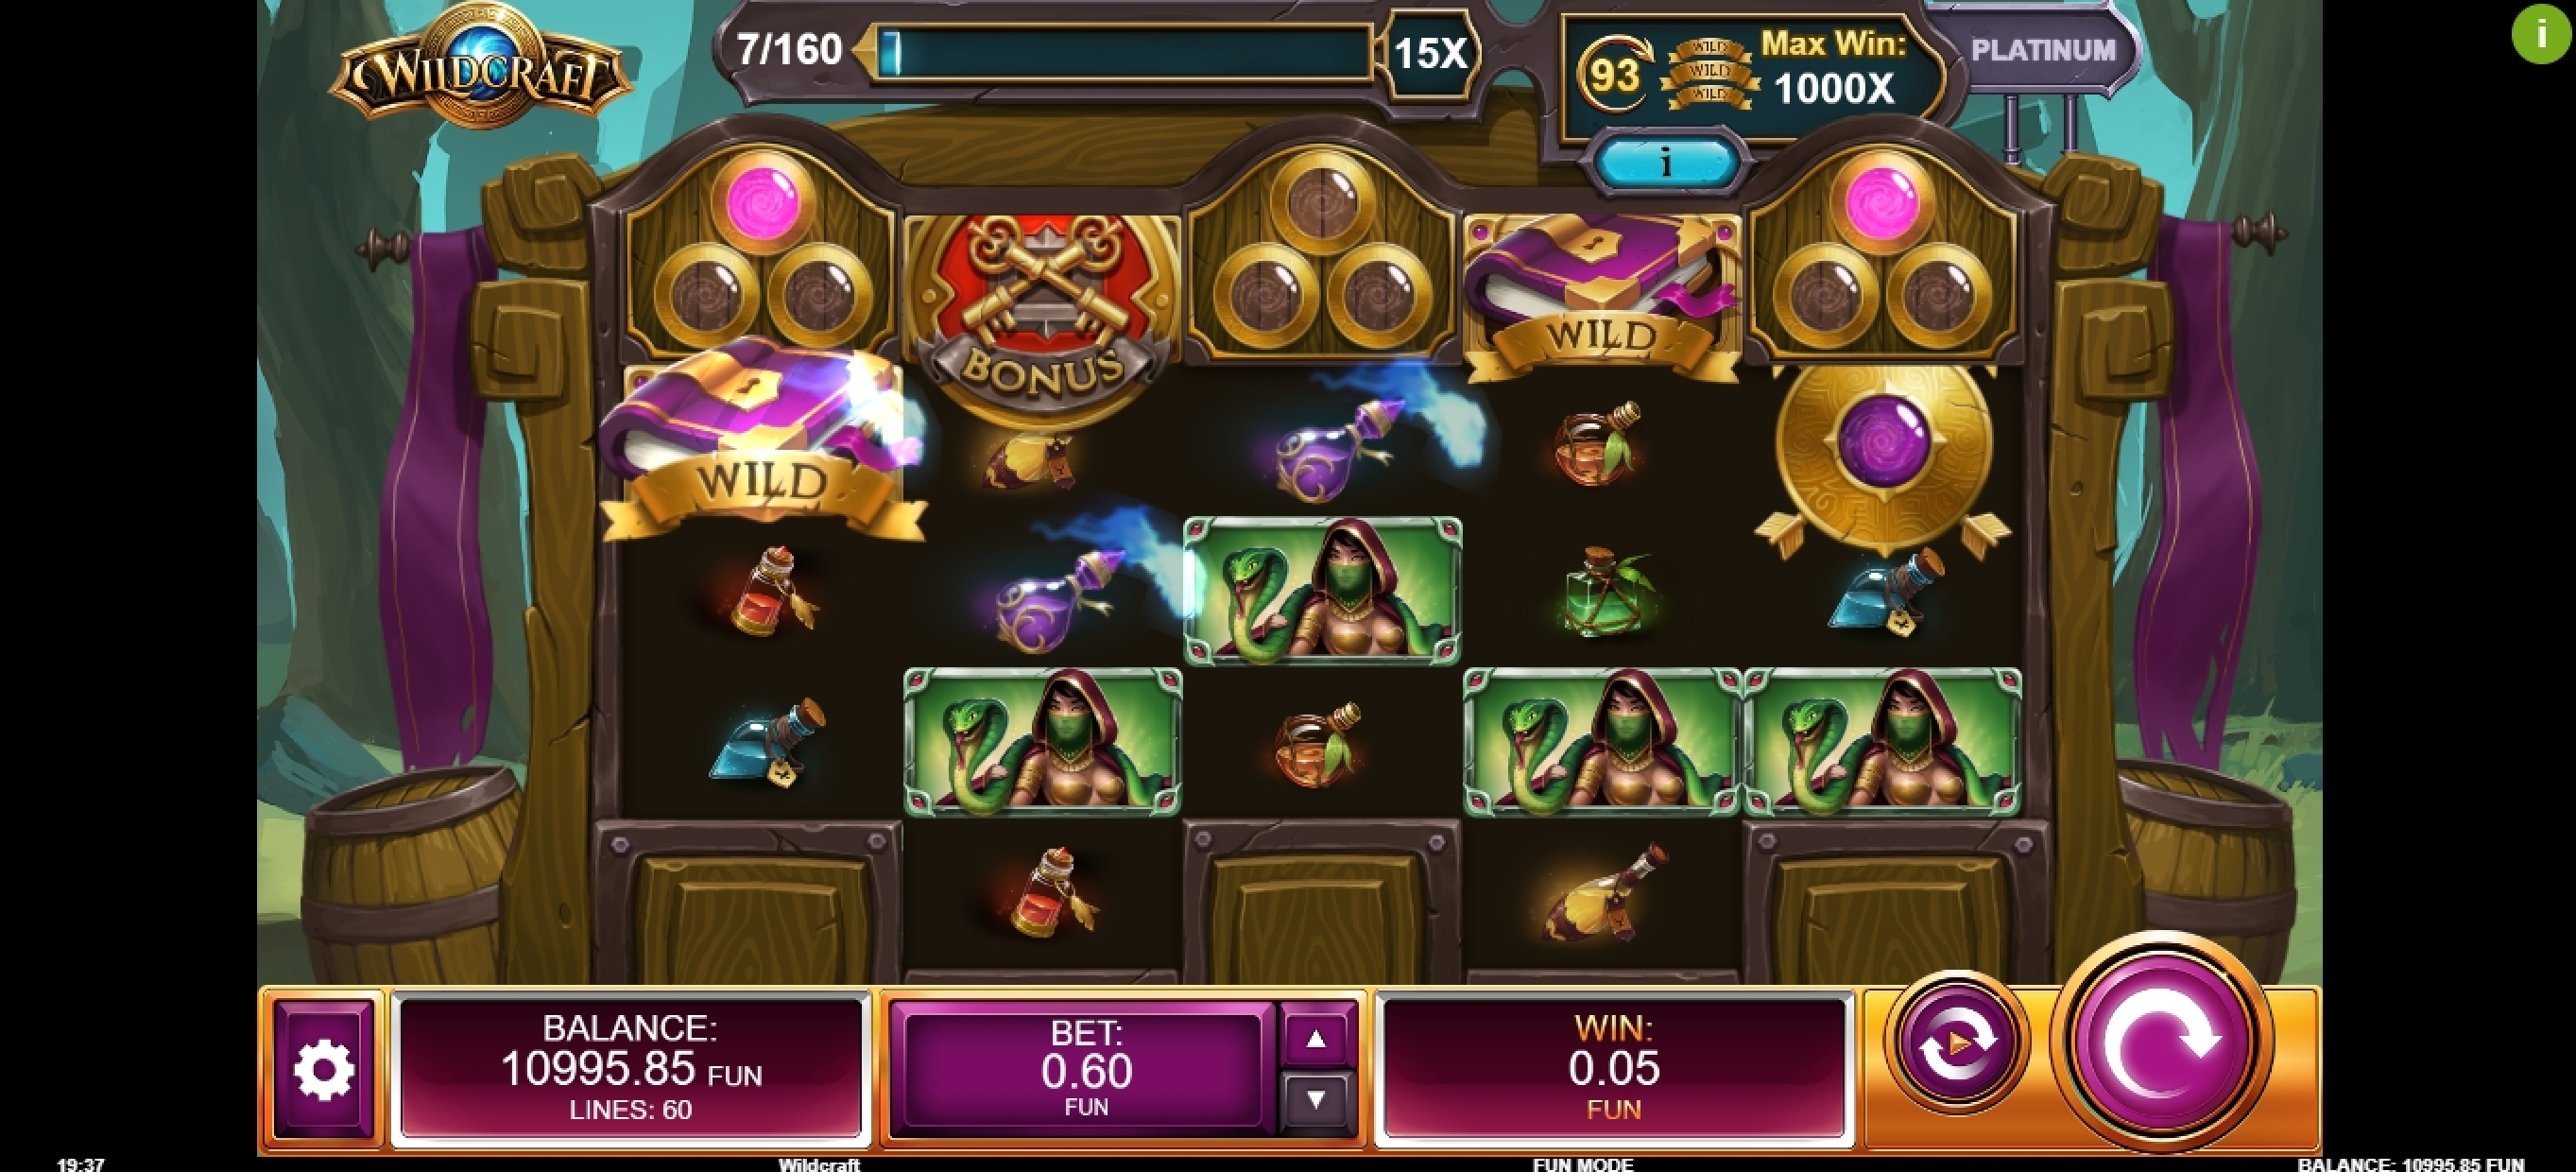 Win Money in Wildcraft Free Slot Game by Kalamba Games